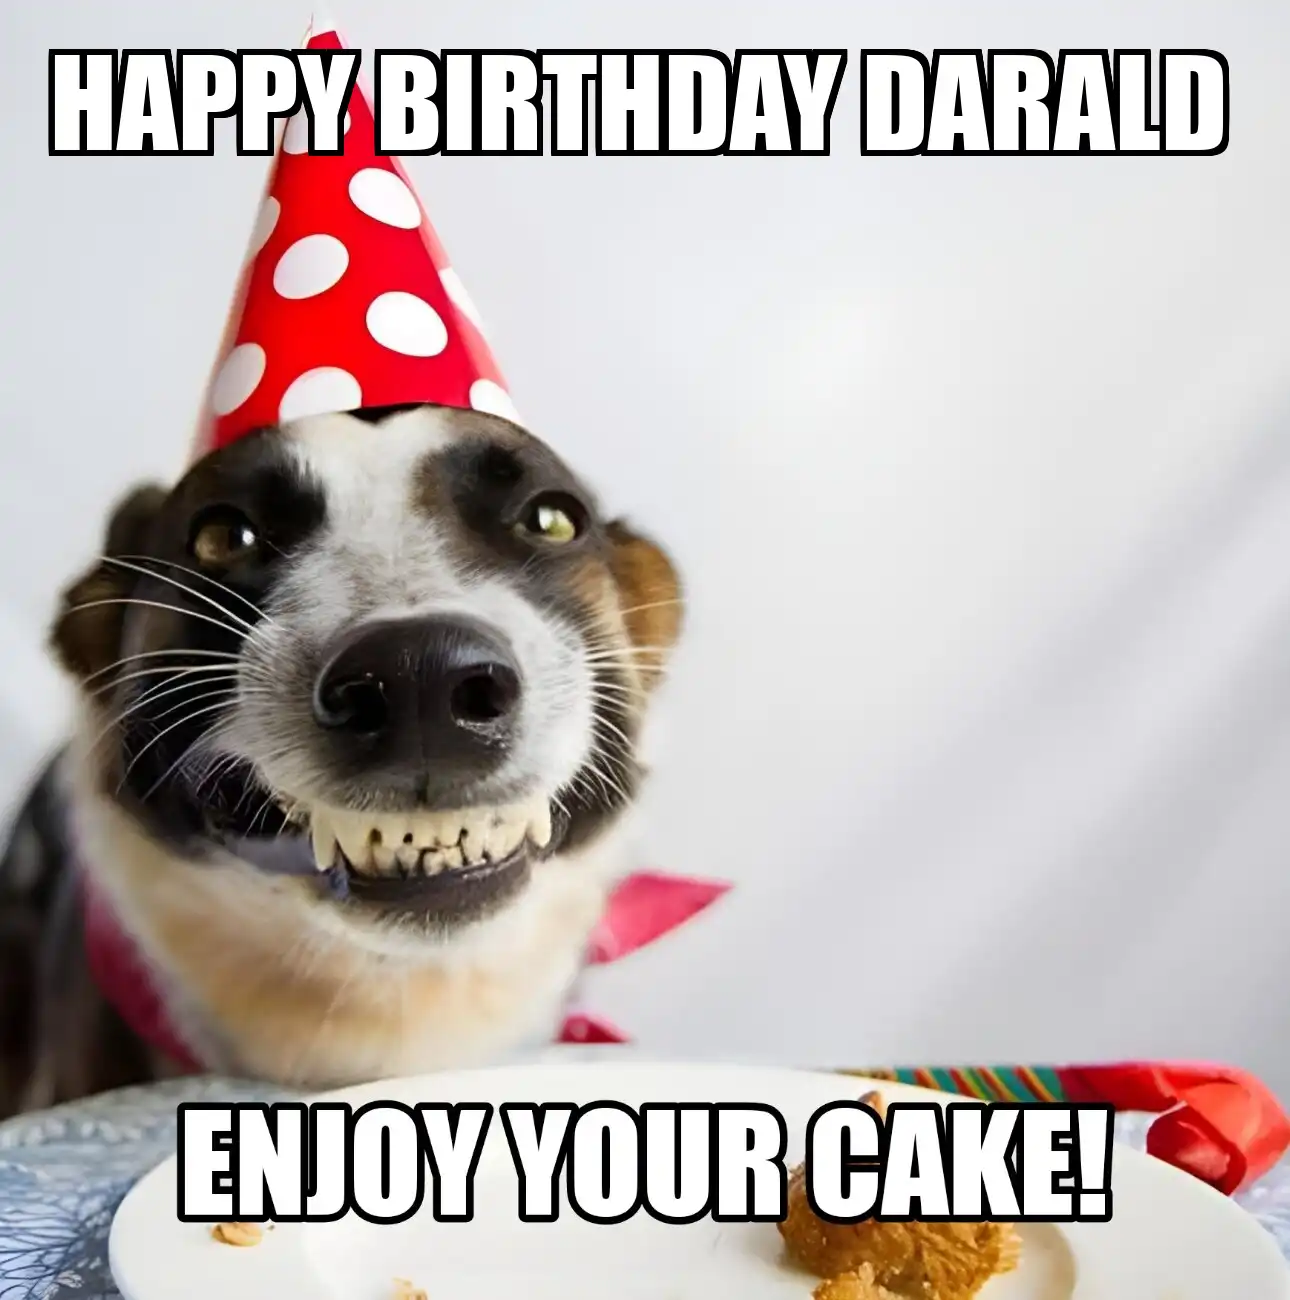 Happy Birthday Darald Enjoy Your Cake Dog Meme